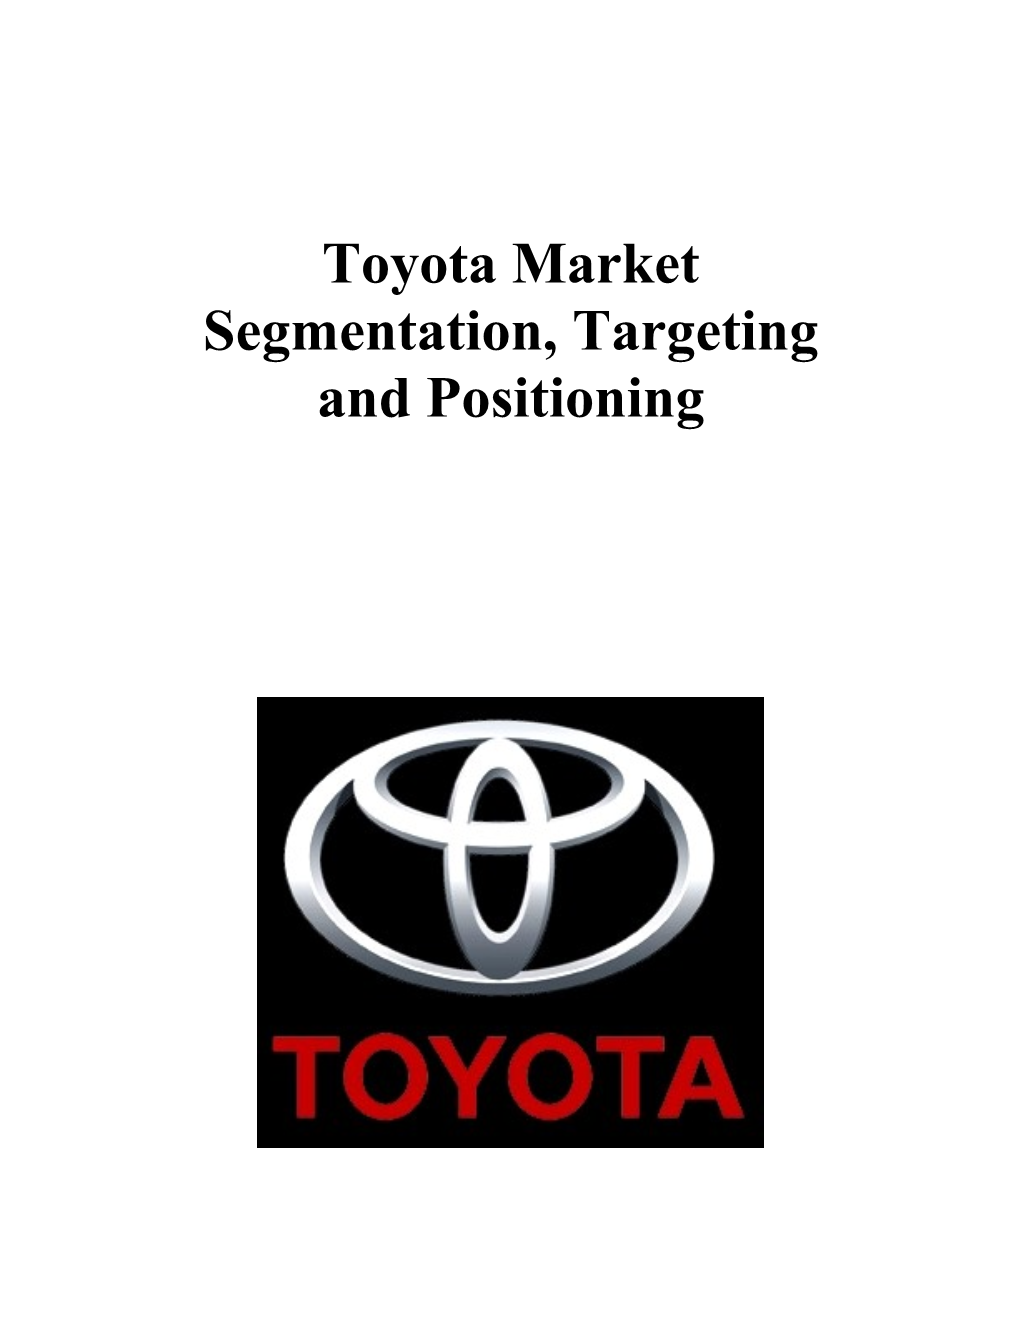 Market Segmentation, Targeting and Positioning Over Toyota